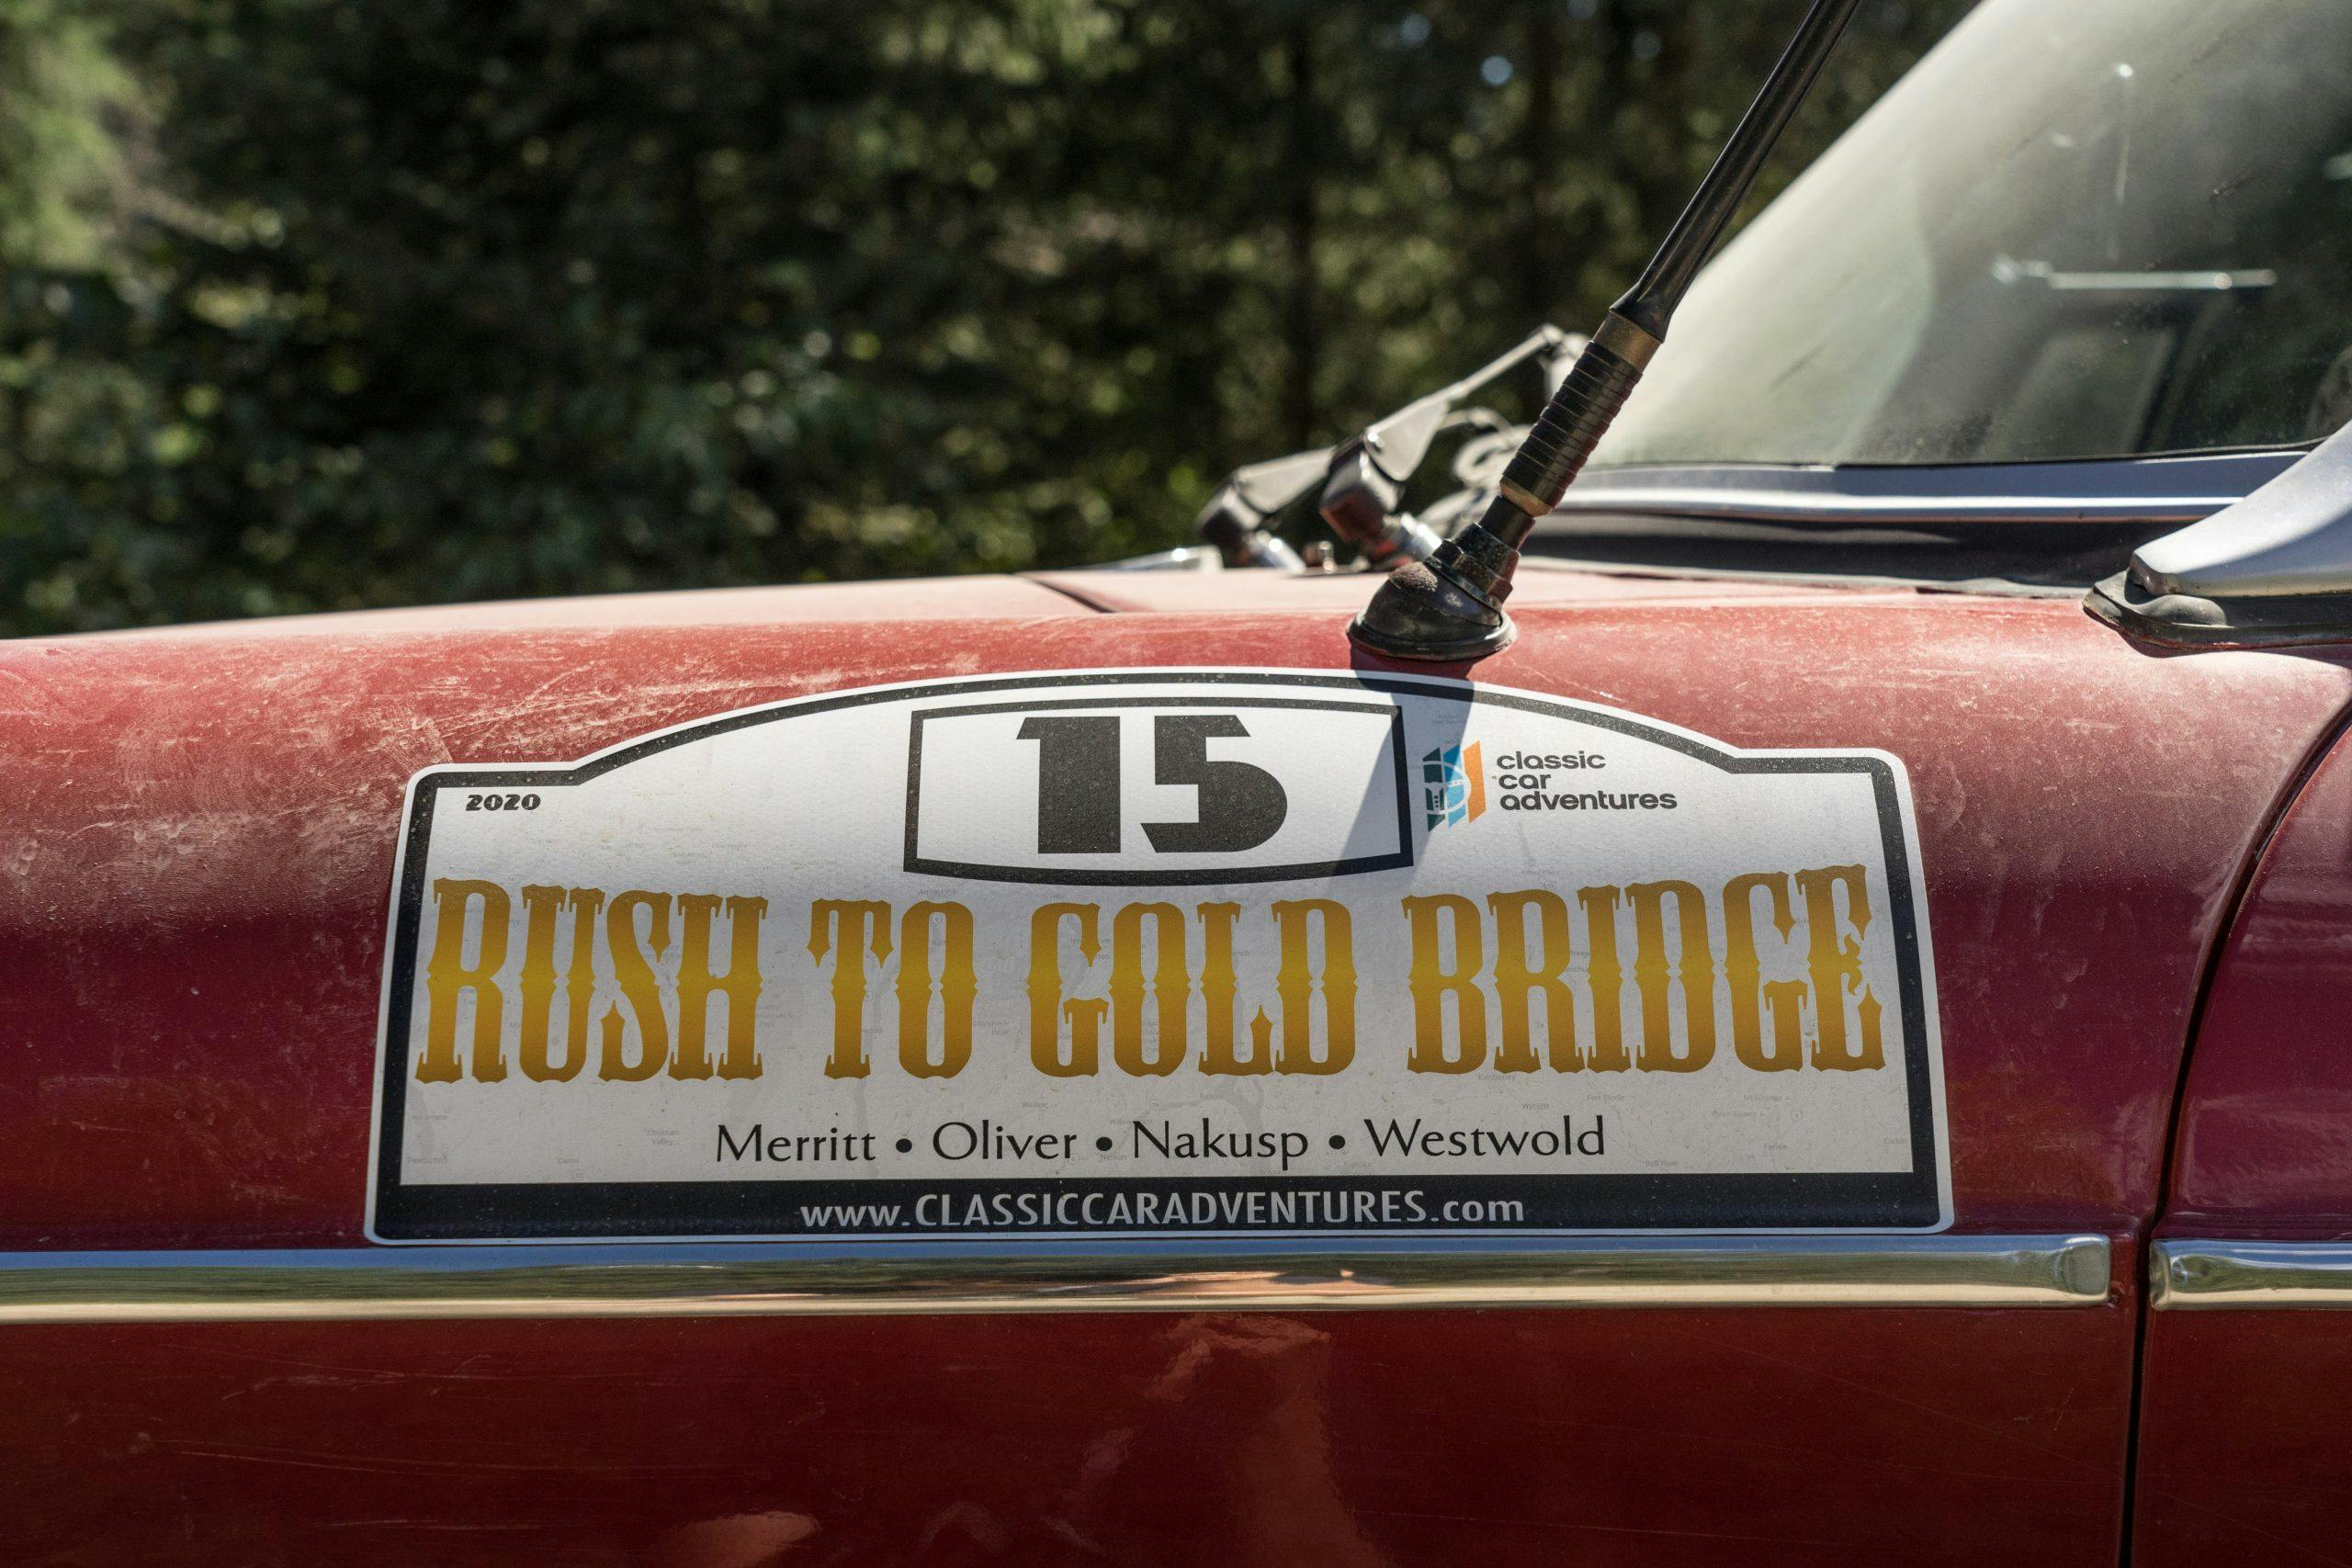 rush to gold bridge rally number